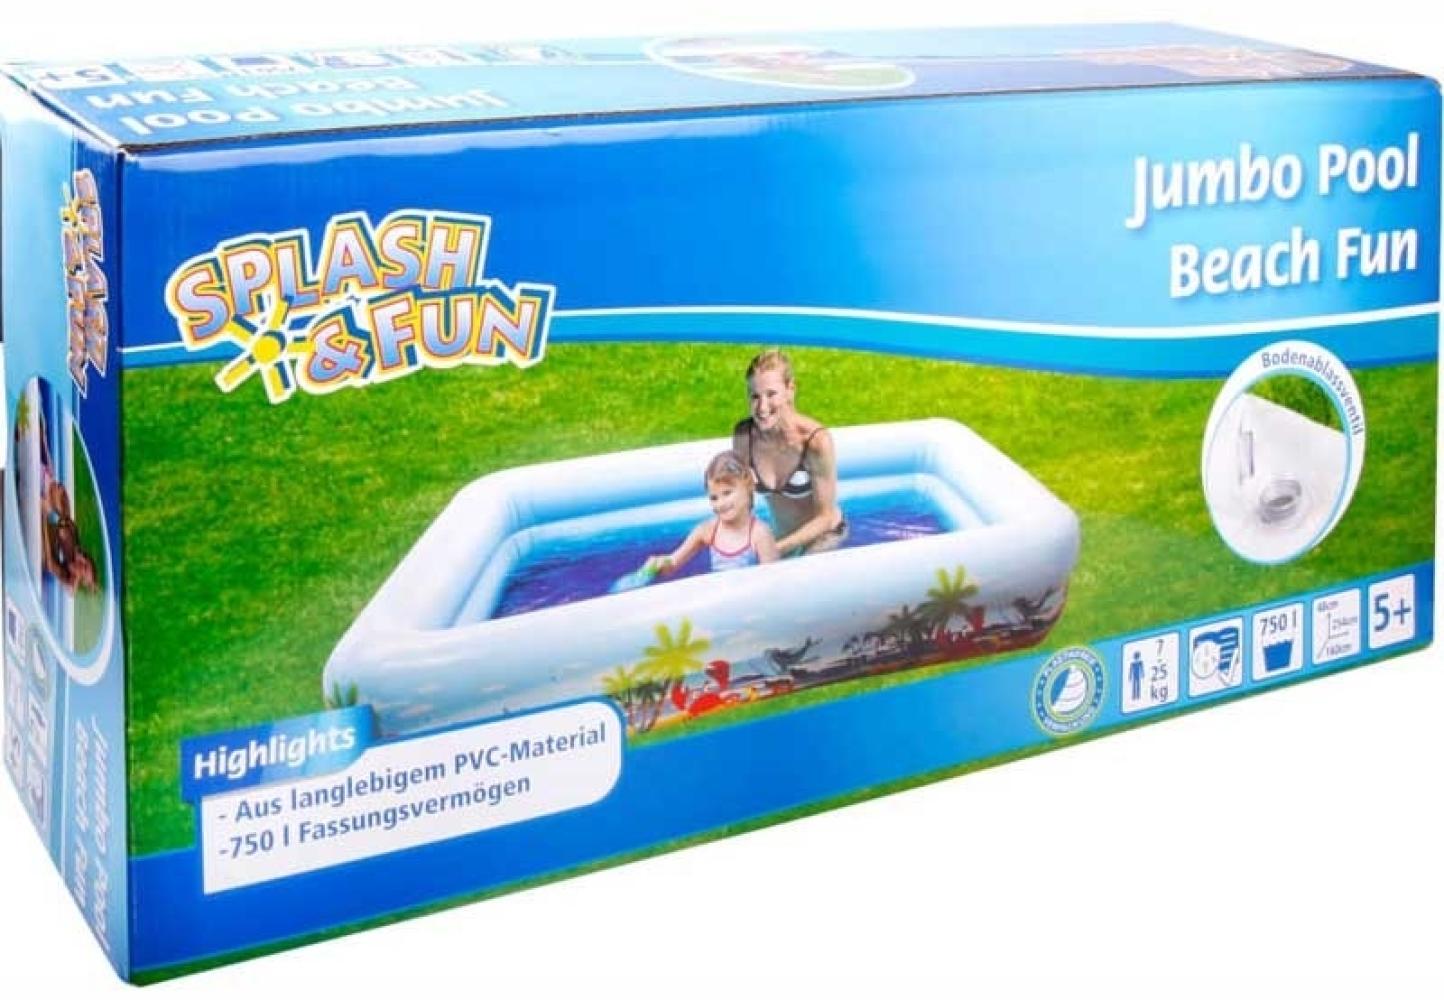 Splash & Fun Jumbo Pool 254 cm Bild 1